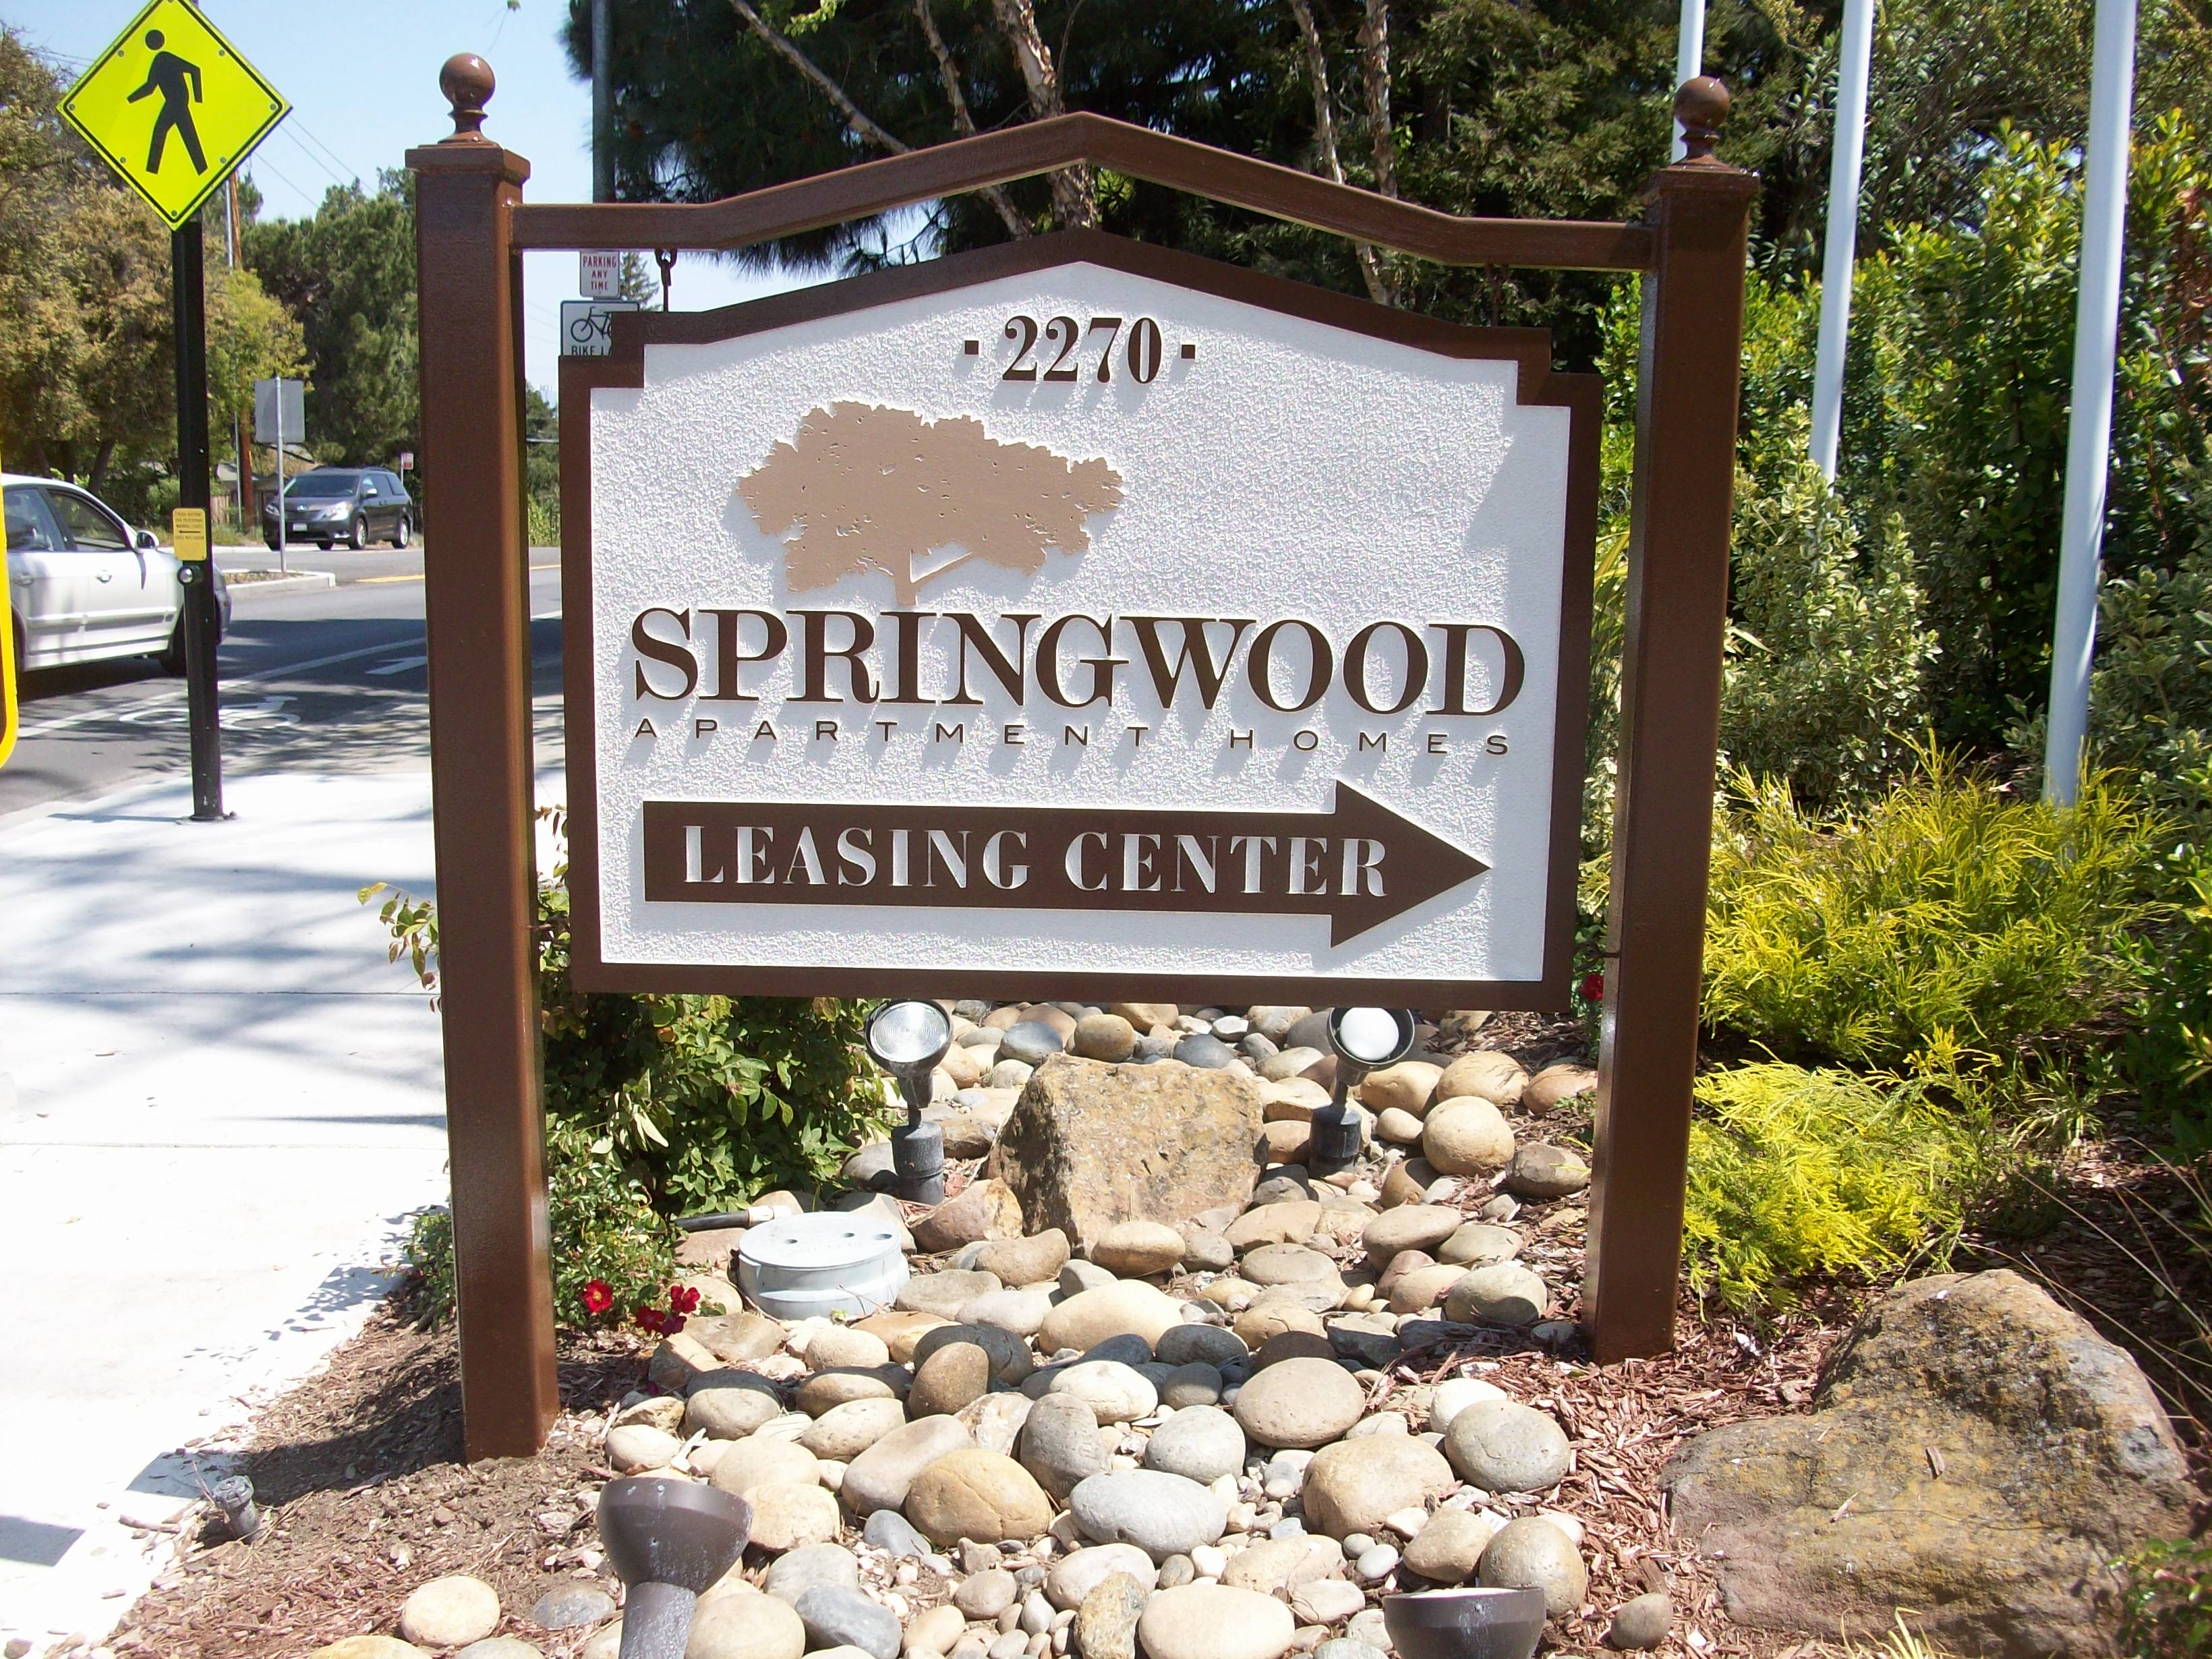 4-22-15 Springwood Monument reface.JPG